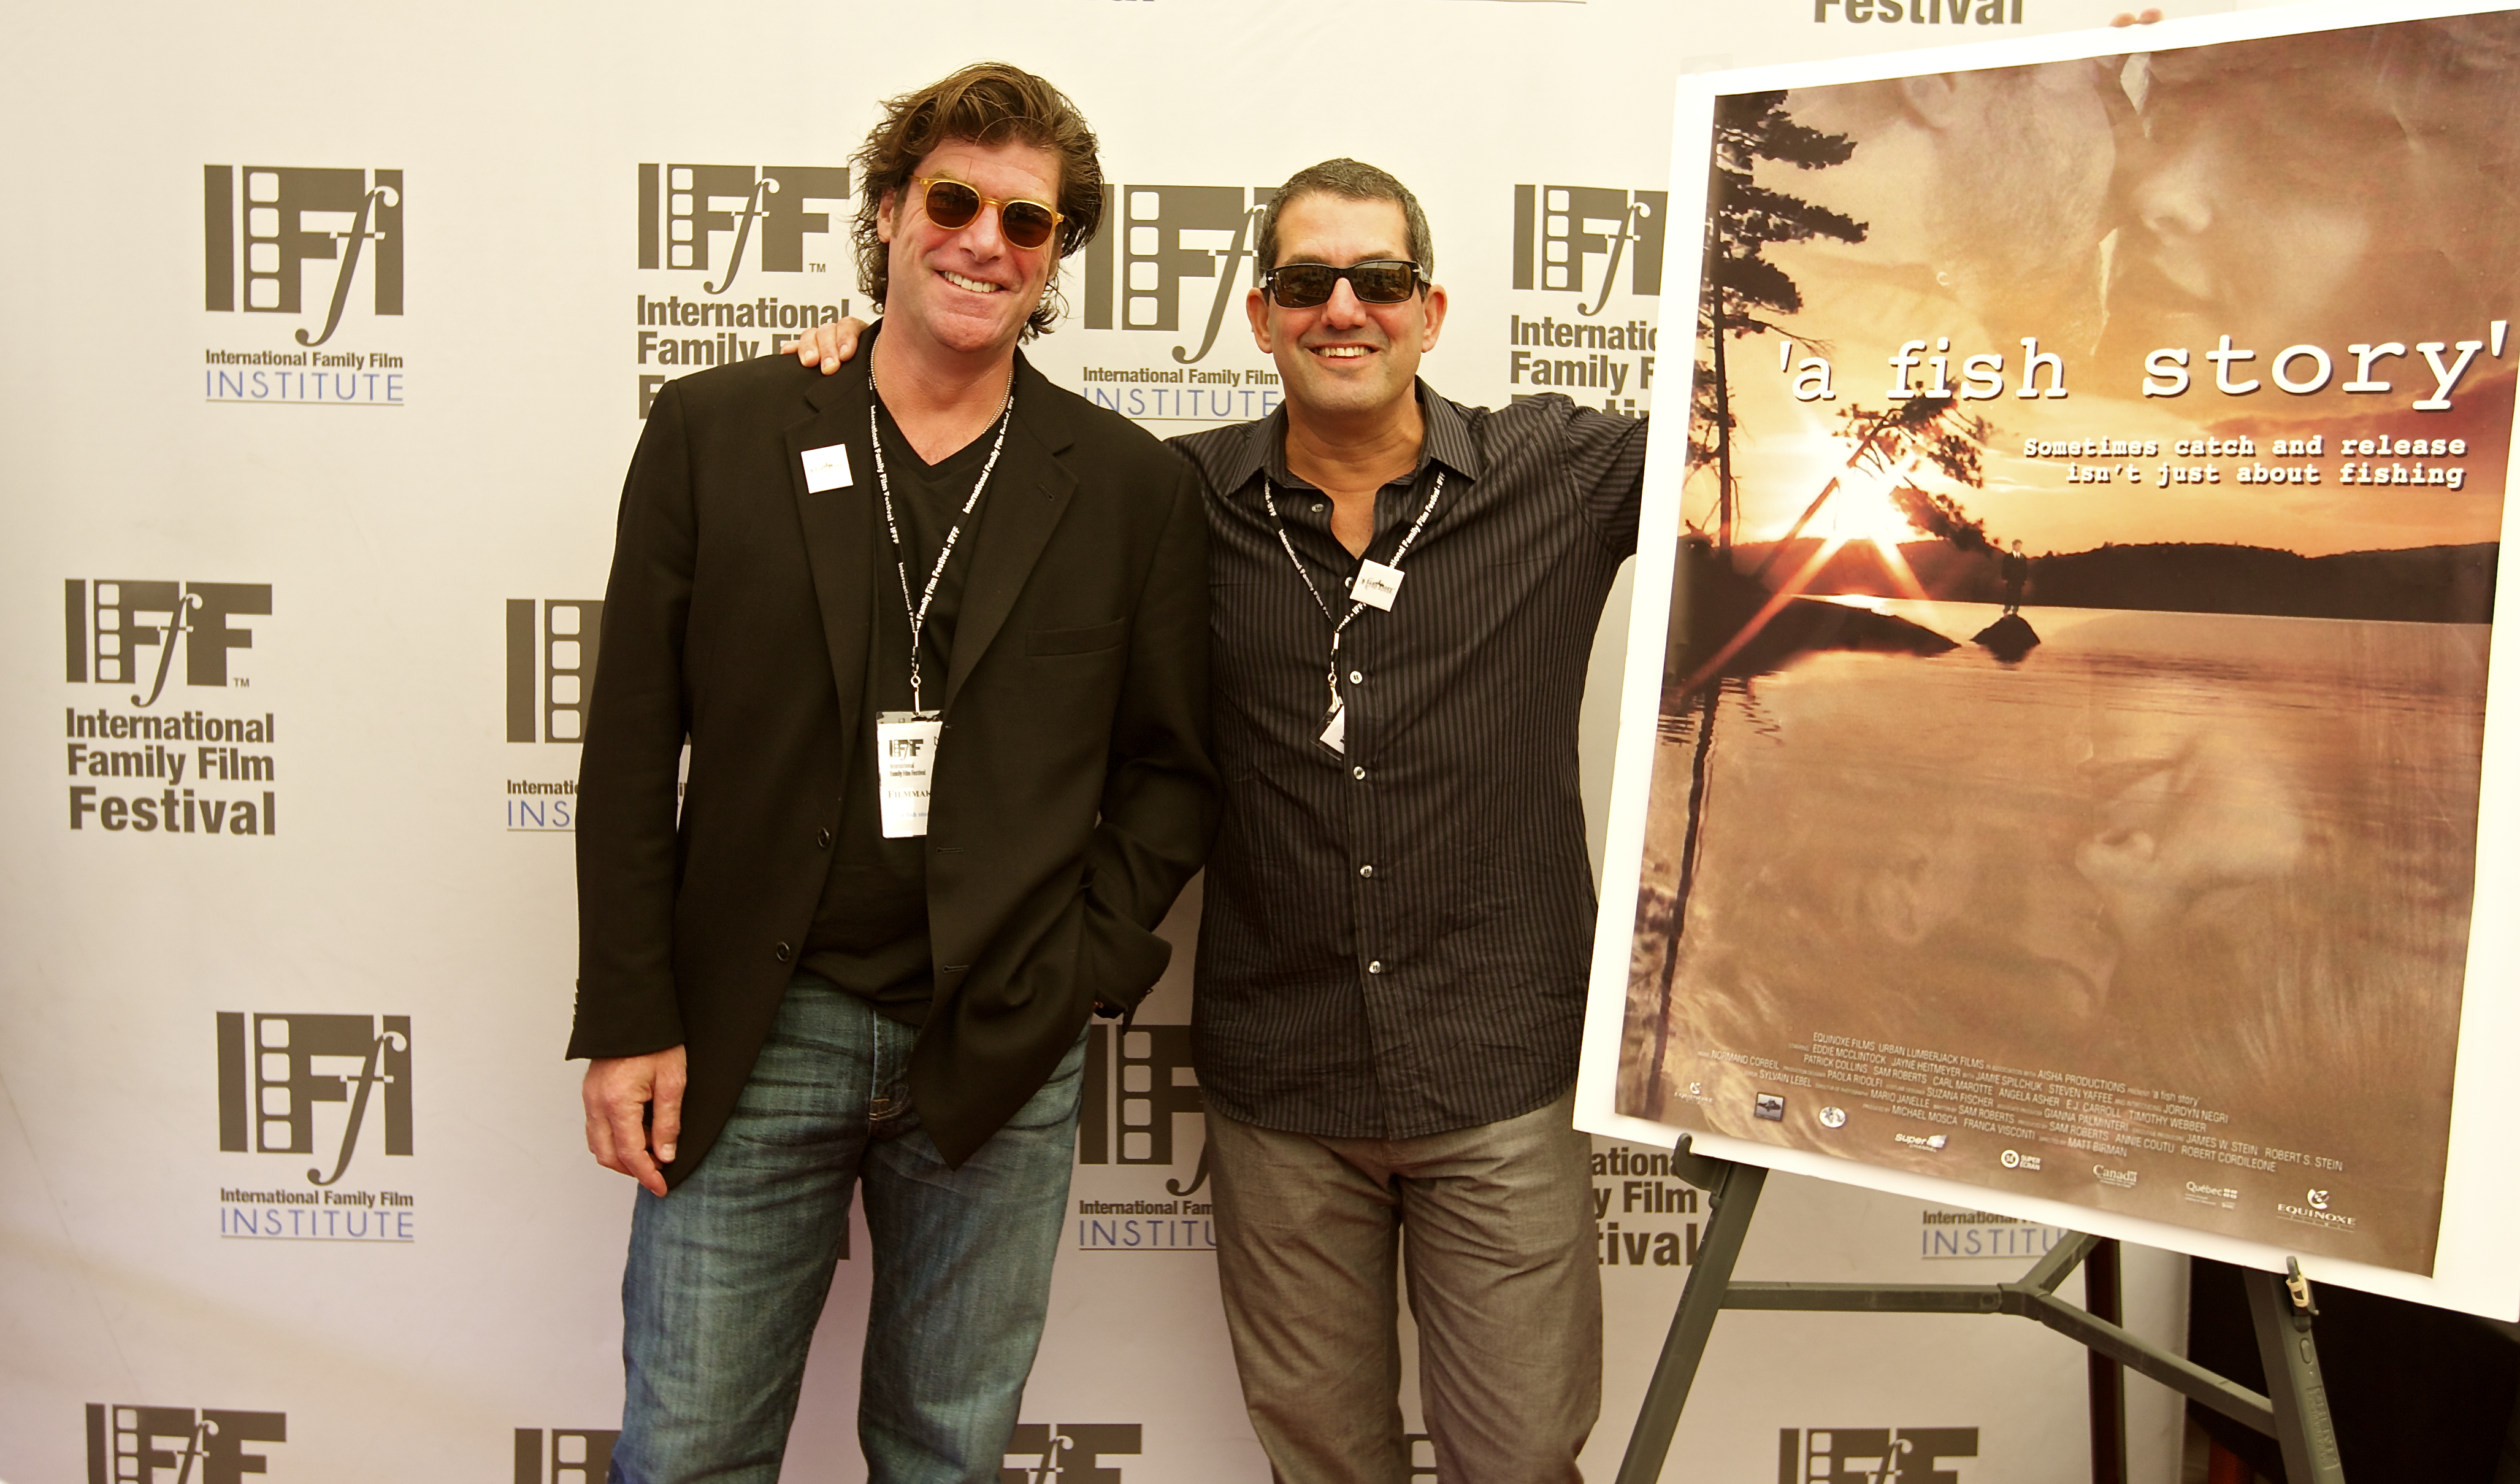 On Red Carpet W/ Director Matt Birman @ Int'l Family Film Festival - 2013